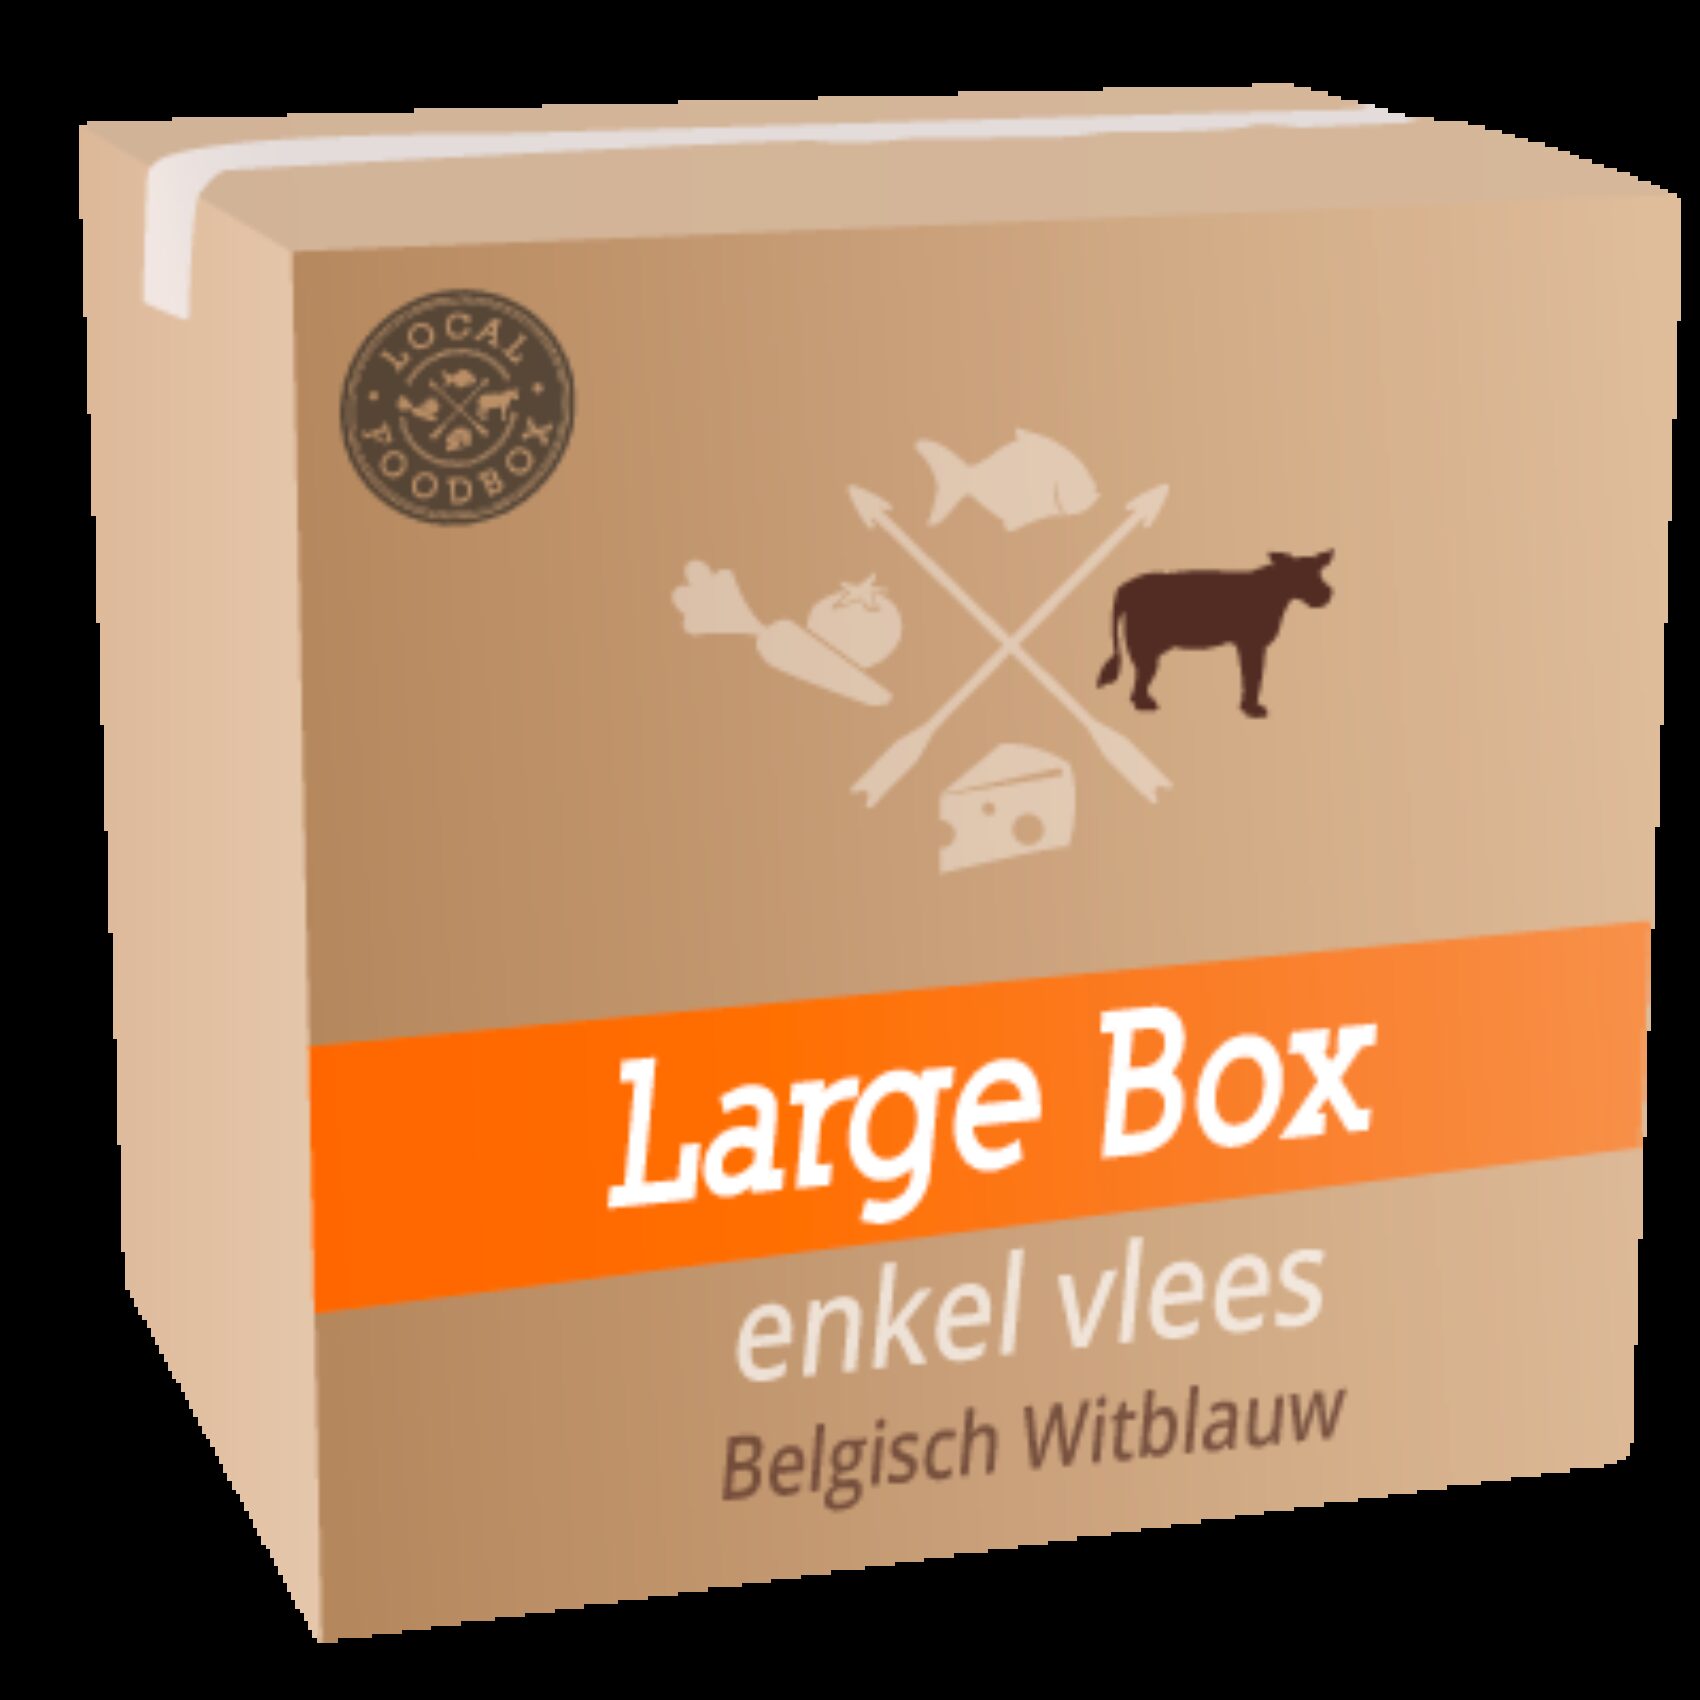 Large rundsvlees box